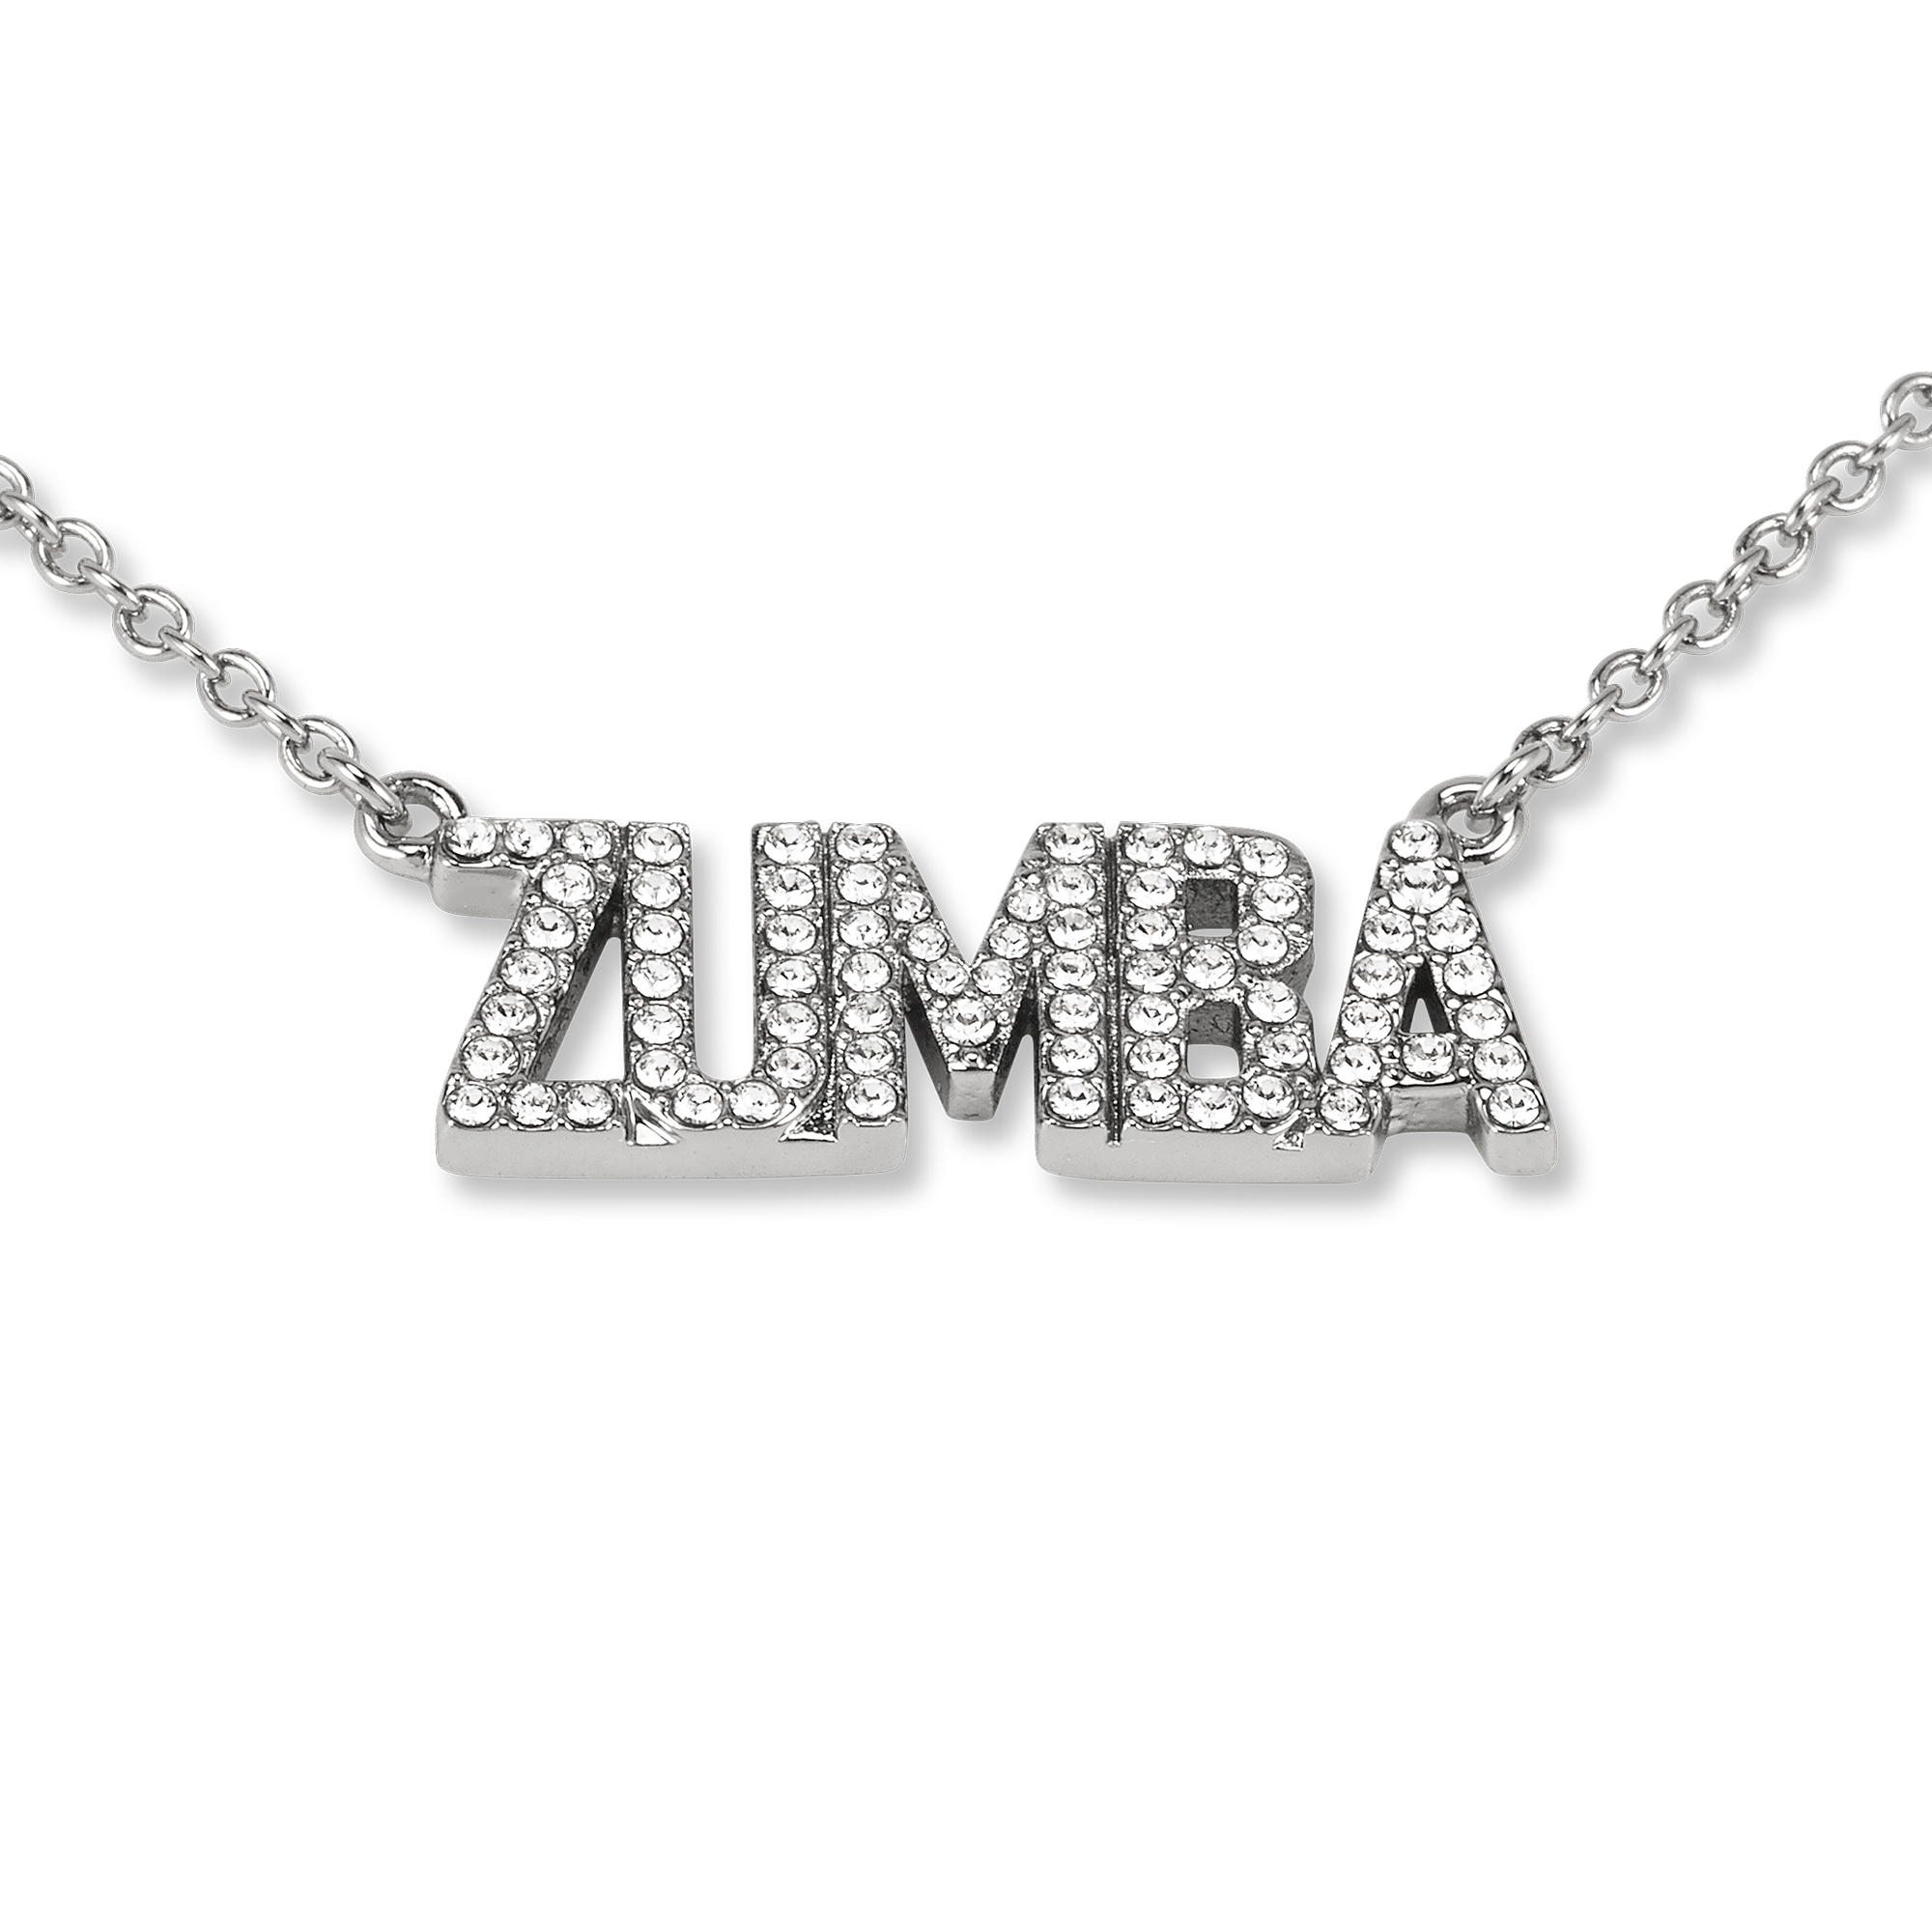 Zumba Necklace With Swarovski Crystals Zumba Shop Seazumba Shop Sea